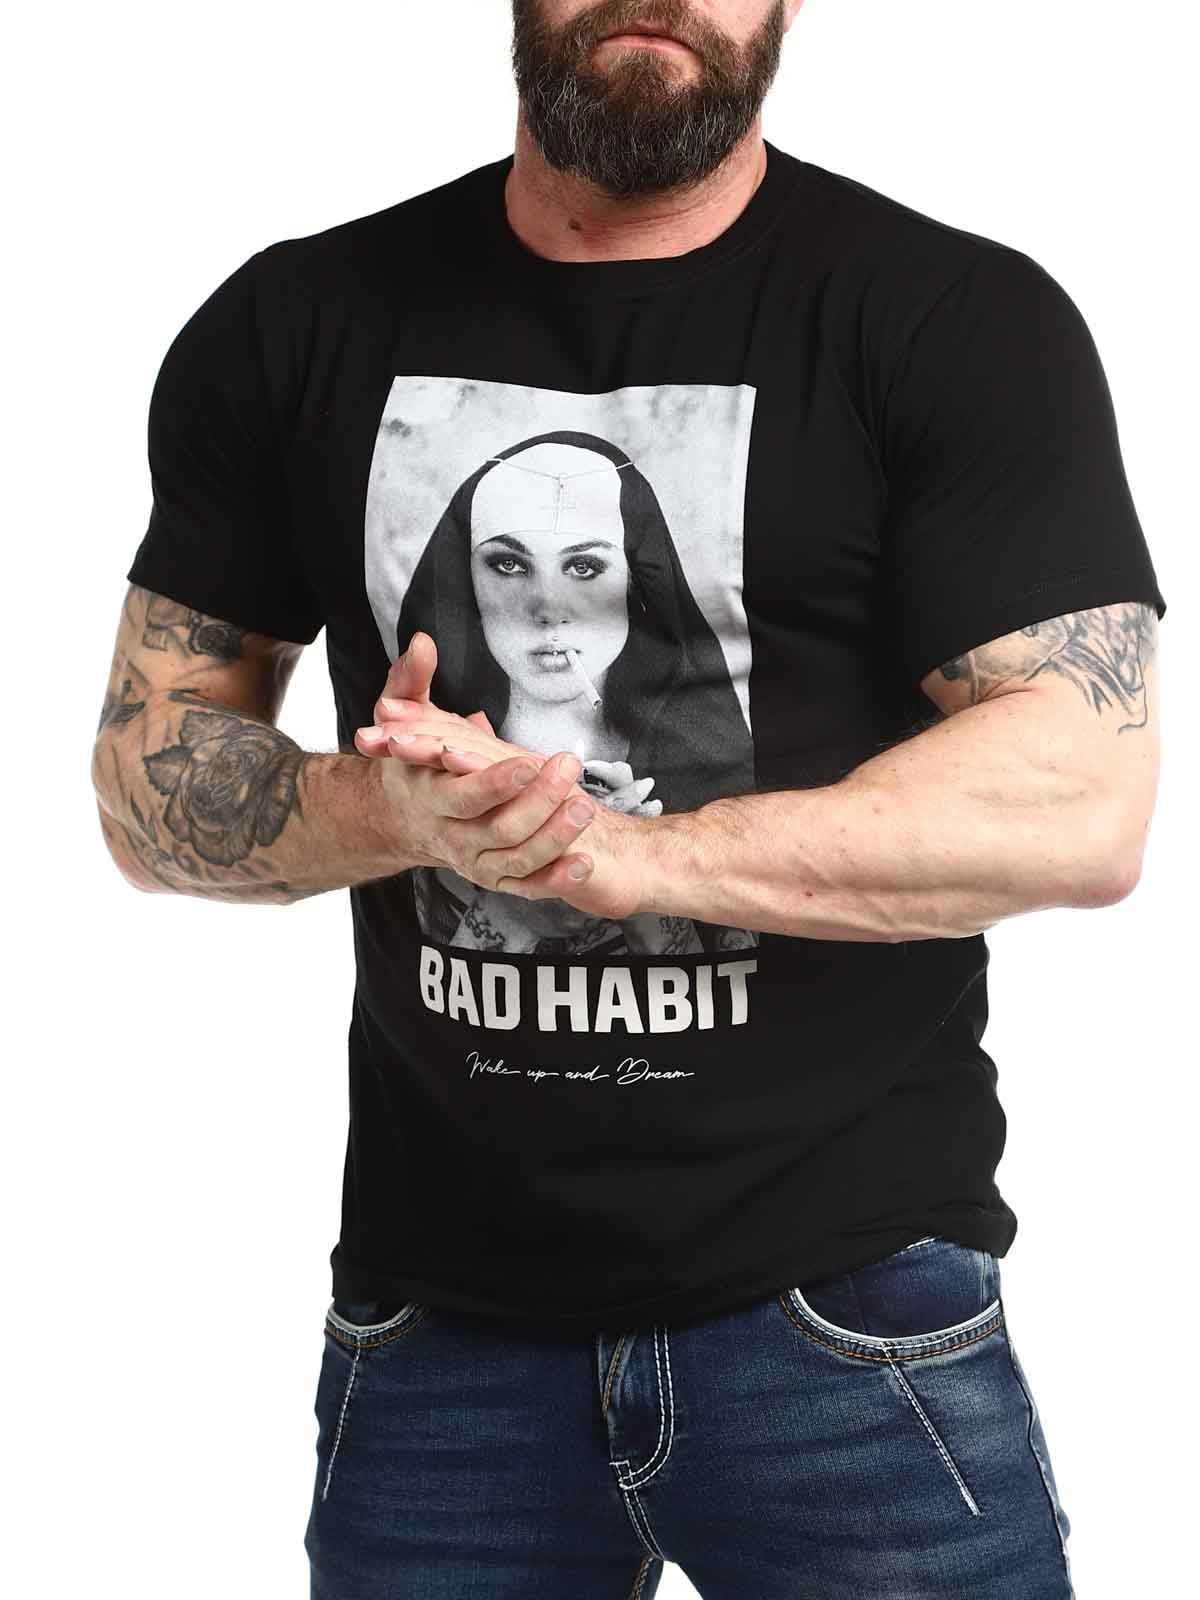 Bad-habbit-tshirt_4.jpg